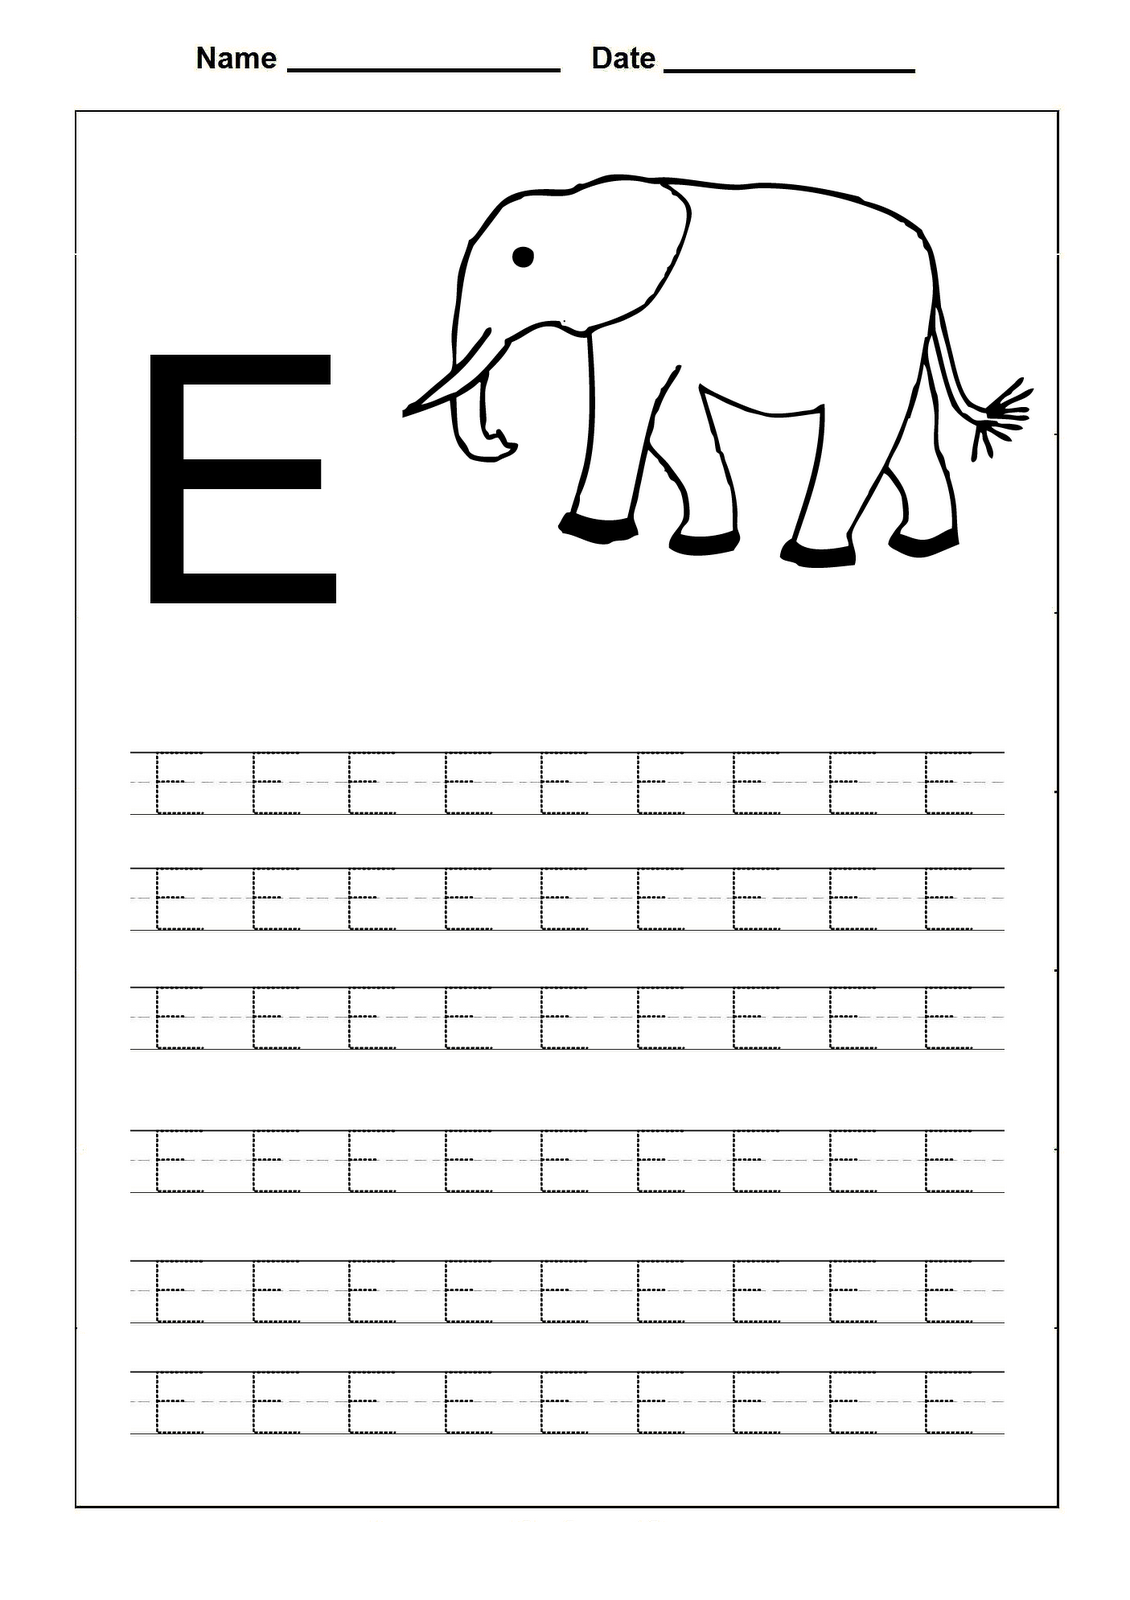 Worksheet ~ Remarkable Free Namecing Worksheets Photo in Letter E Tracing Worksheets Preschool